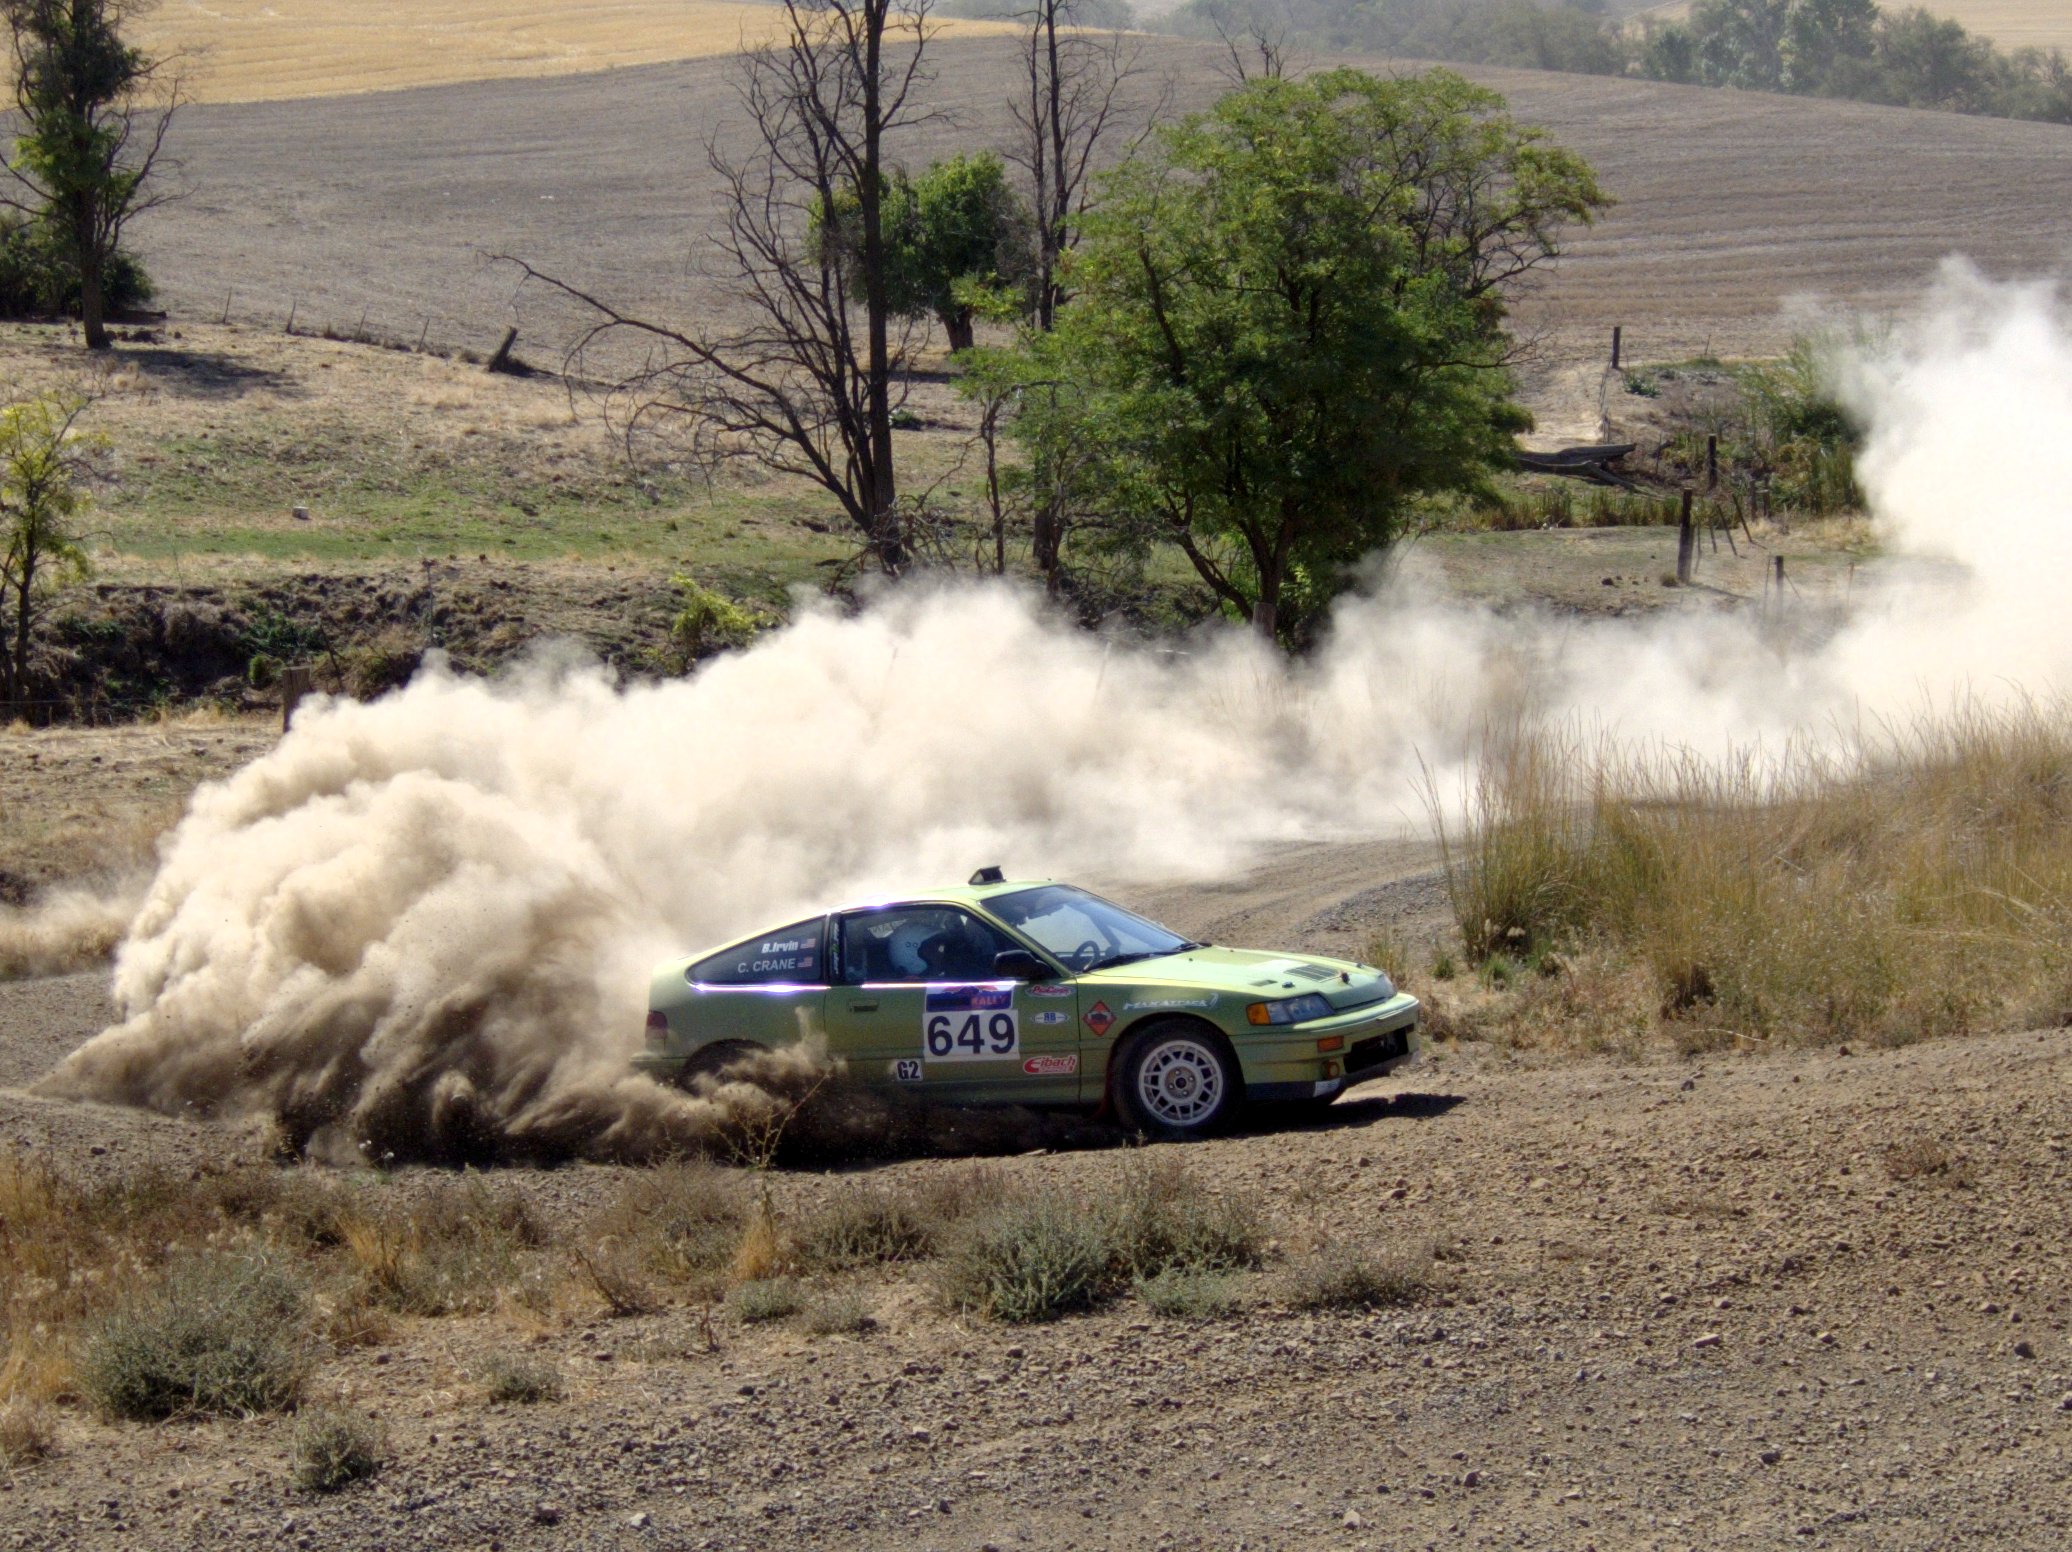 a green rally car kicking up dirt during a race